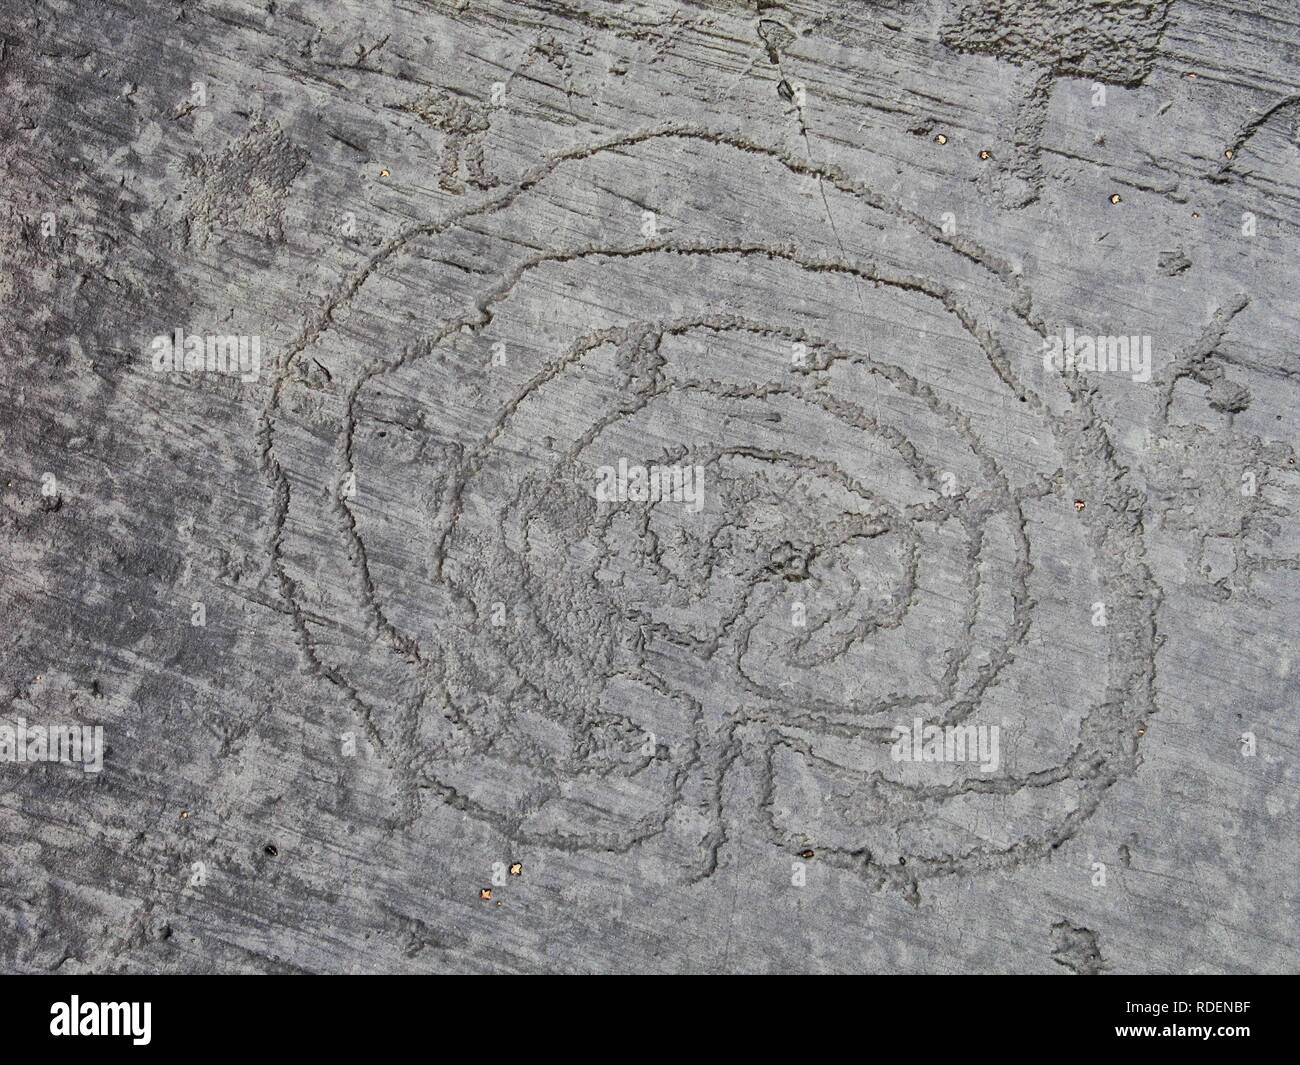 Rock Zeichnungen, die 'Labyrinth', Val Camonica, Italien, Lombardei, Provinz Brescia, Camonica Tal, Capo di Ponte, UNESCO Weltkulturerbe Stockfoto